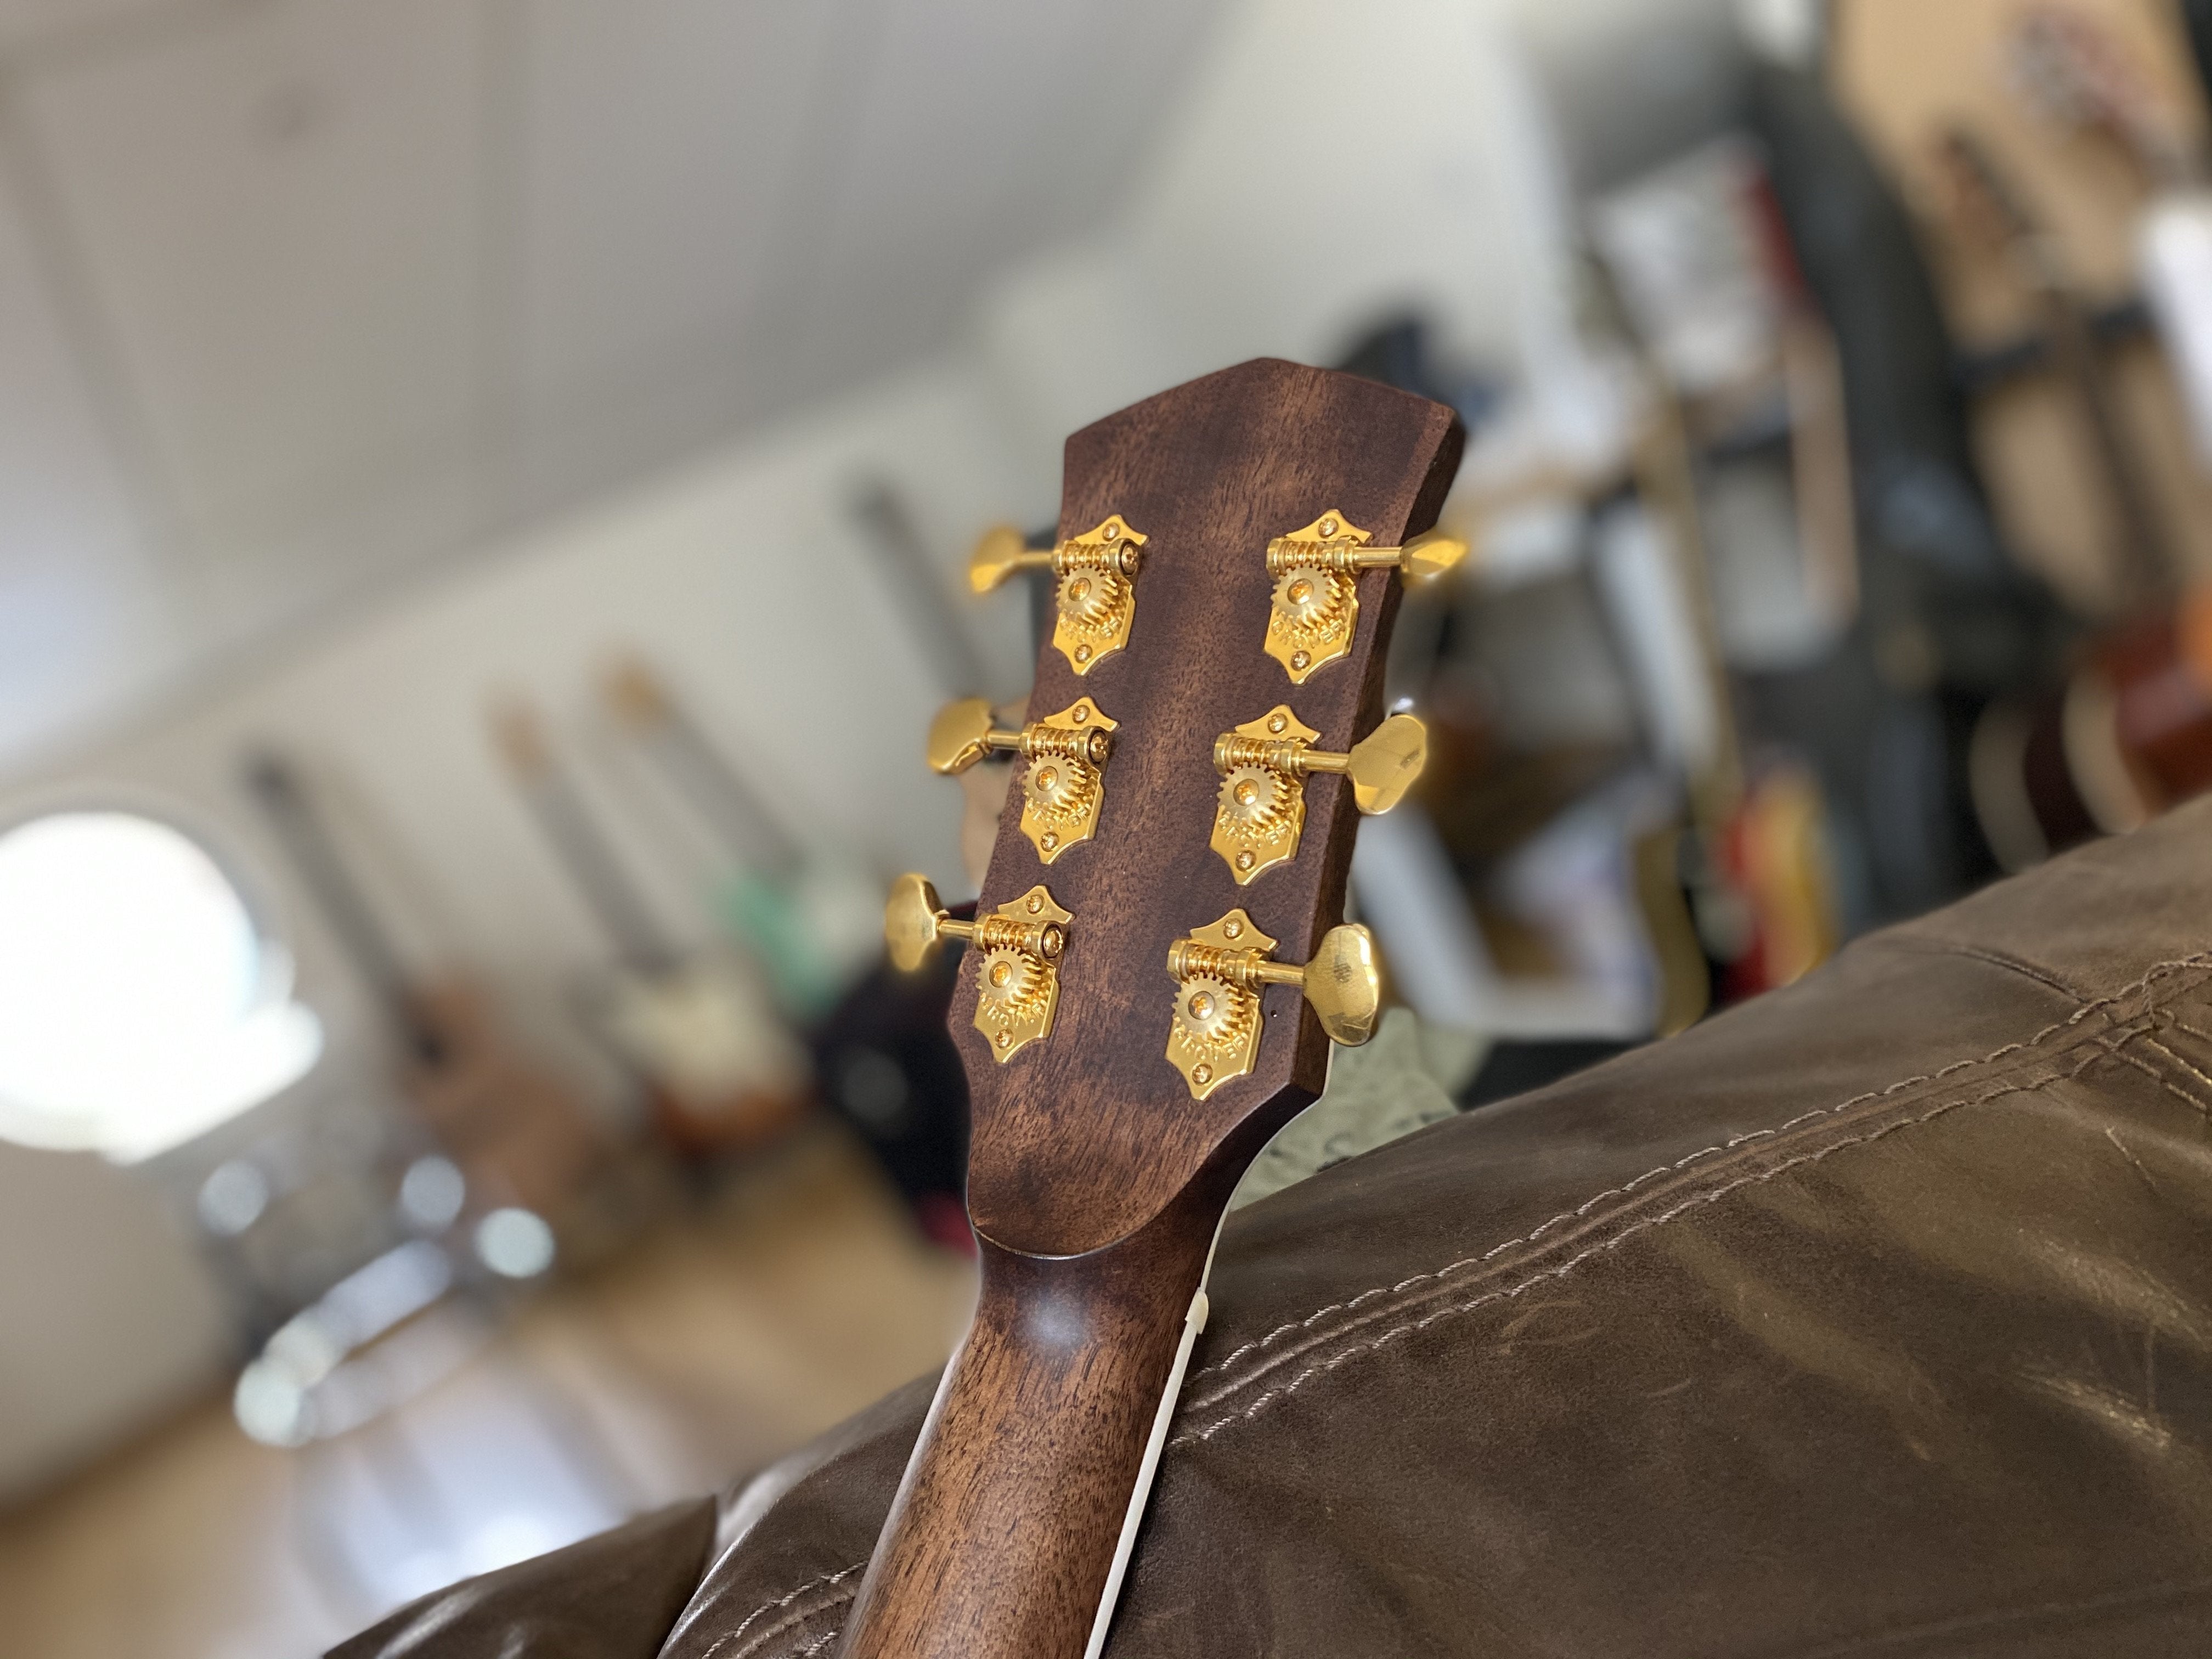 Cort Gold D8 C Natural, Acoustic Guitar for sale at Richards Guitars.